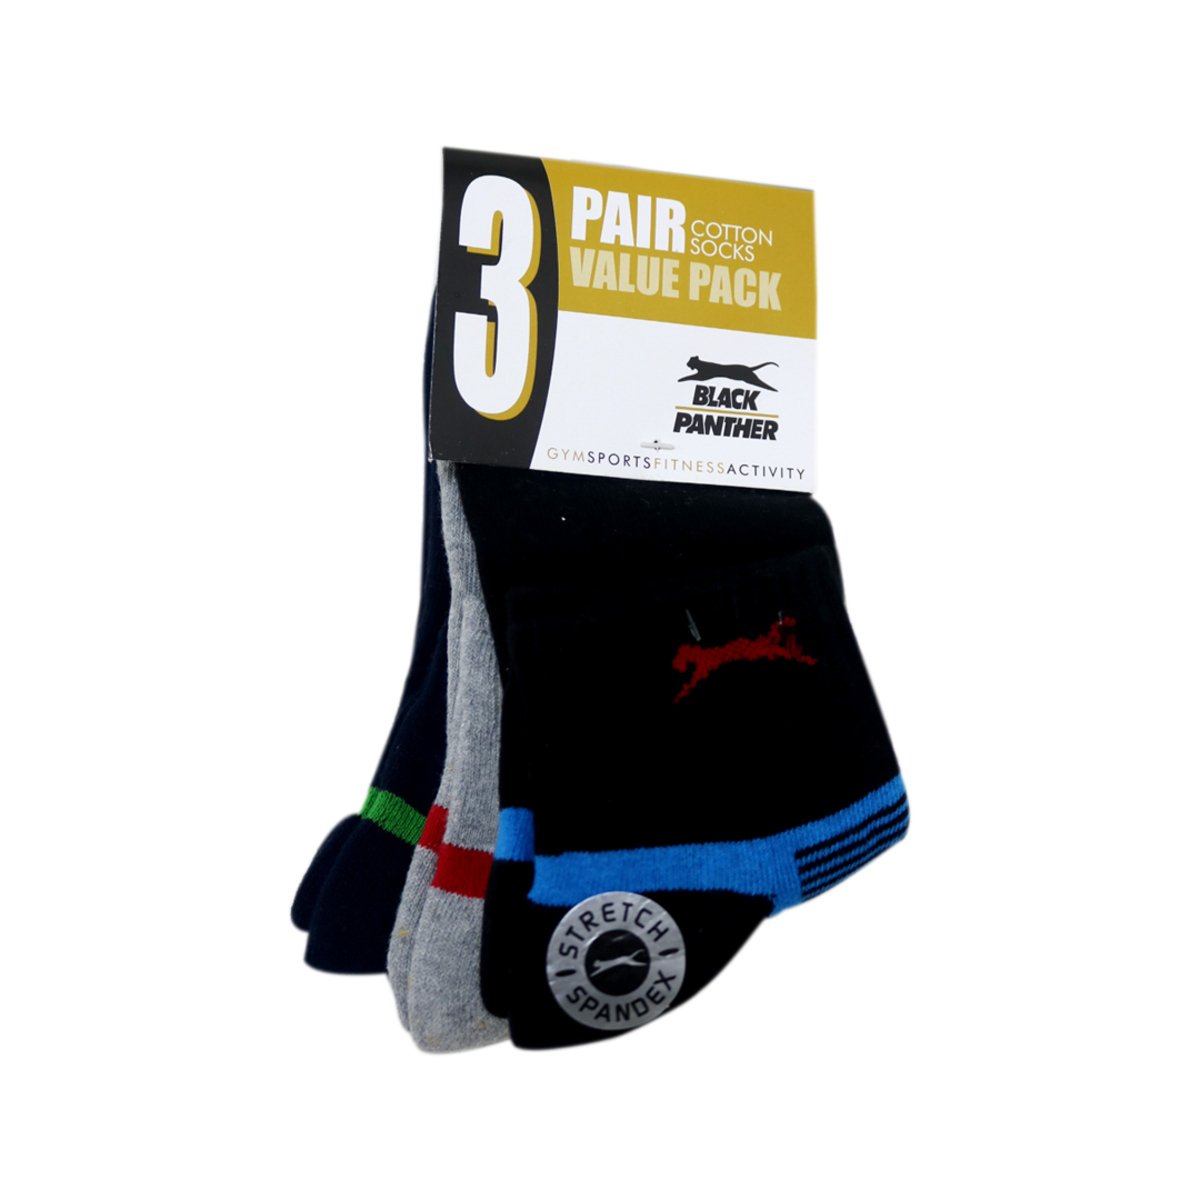 Black Panther Men Ankle Socks 3pcs Pack